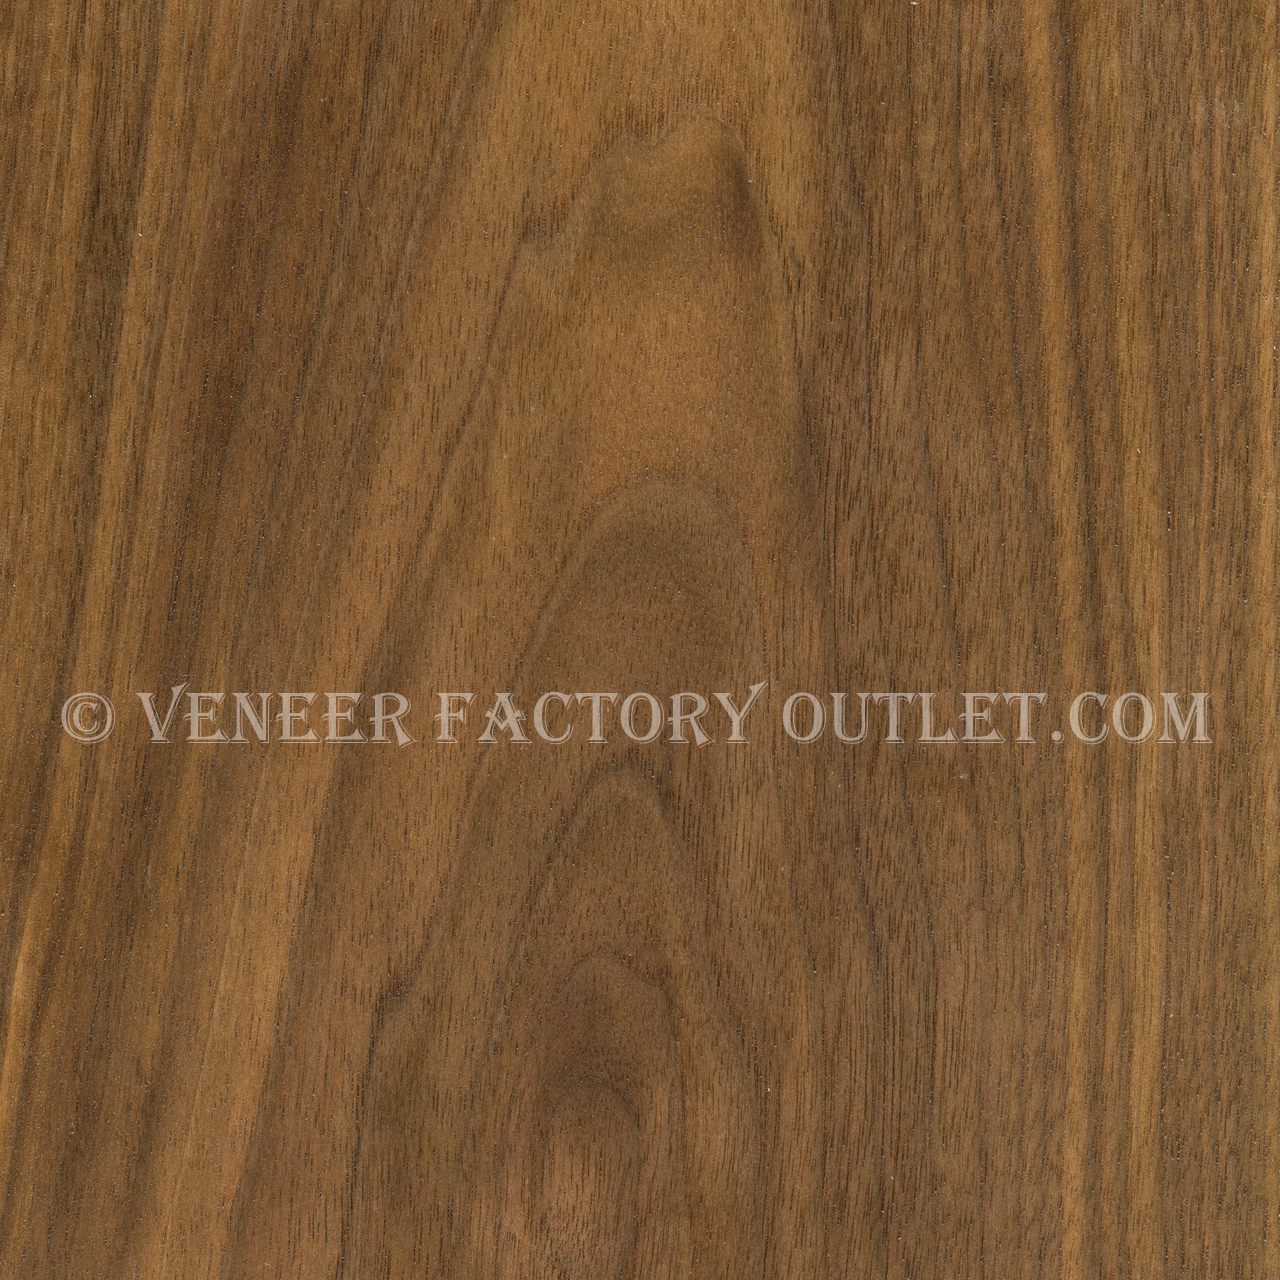 Walnut Veneer: Premium Quartered Italian Walnut Wood Veneers Sheets